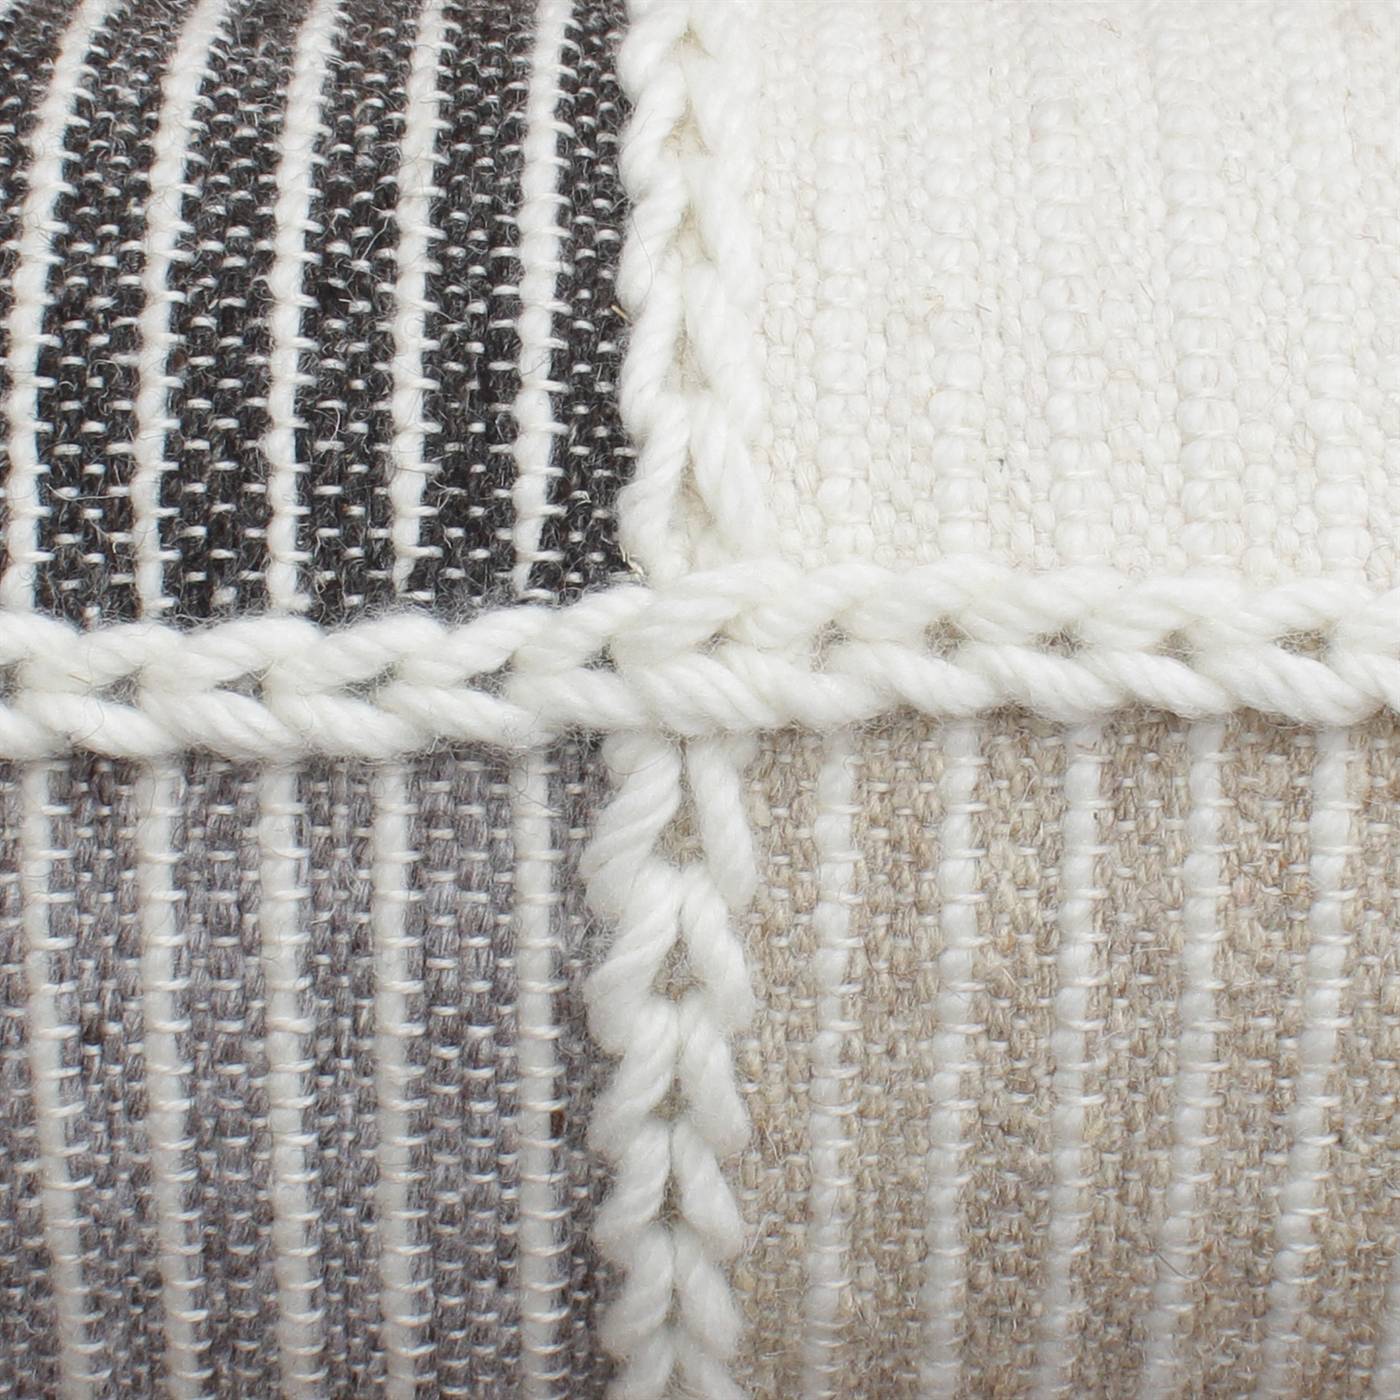 Atkinson Lumber Cushion, 36x91 cm, Natural White, Grey, Beige, Wool, Hand Woven, Pitloom, Flat Weave